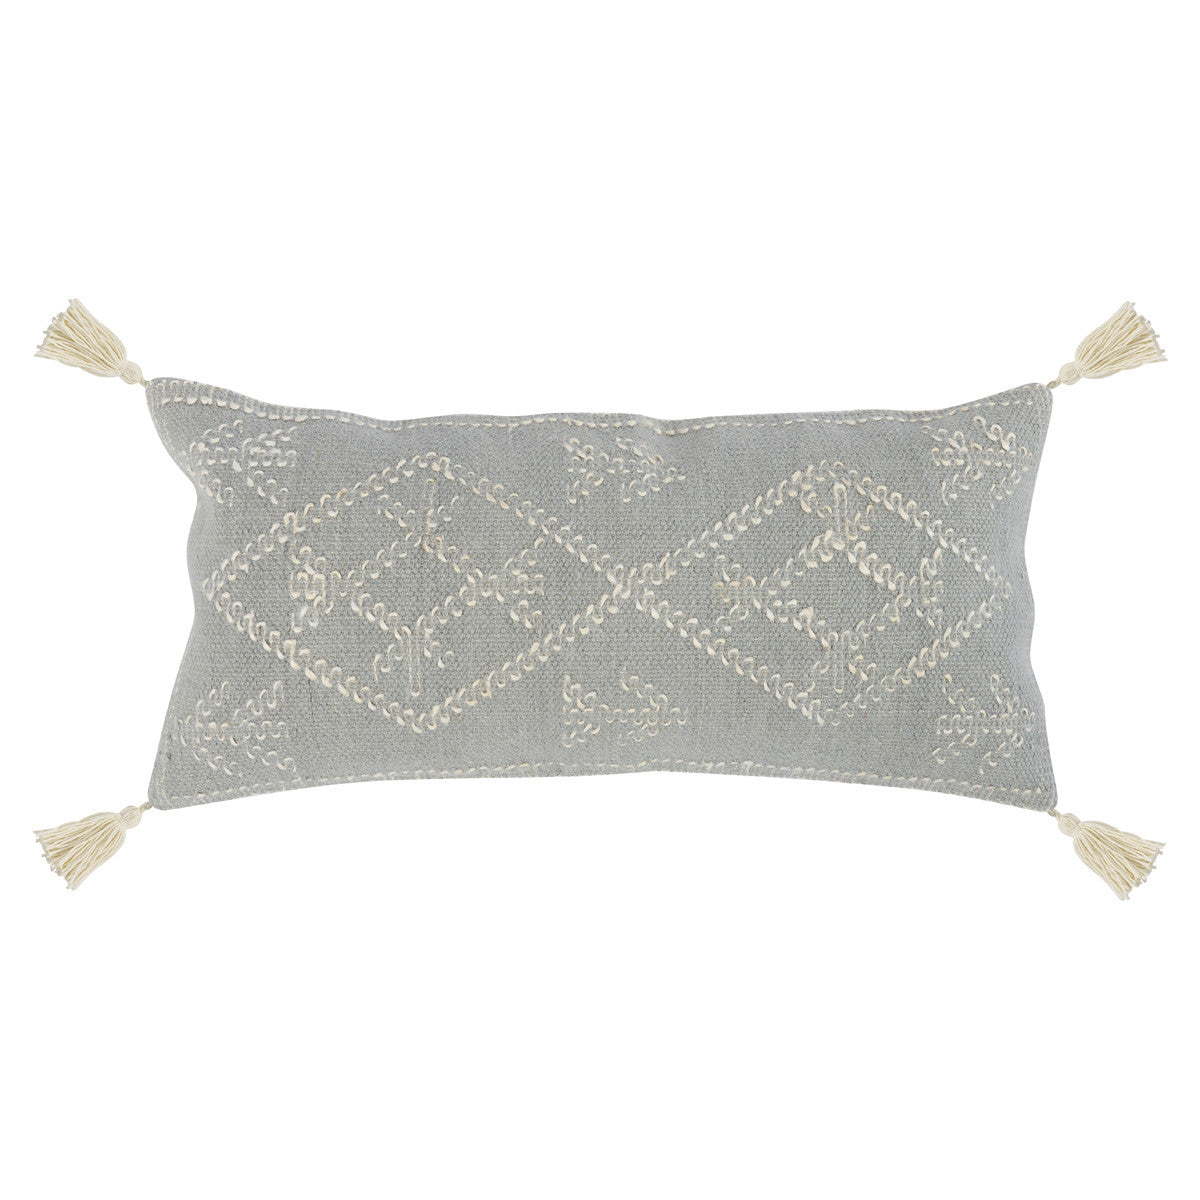 16" X 36" Gray Jute Patterned Zippered Pillow